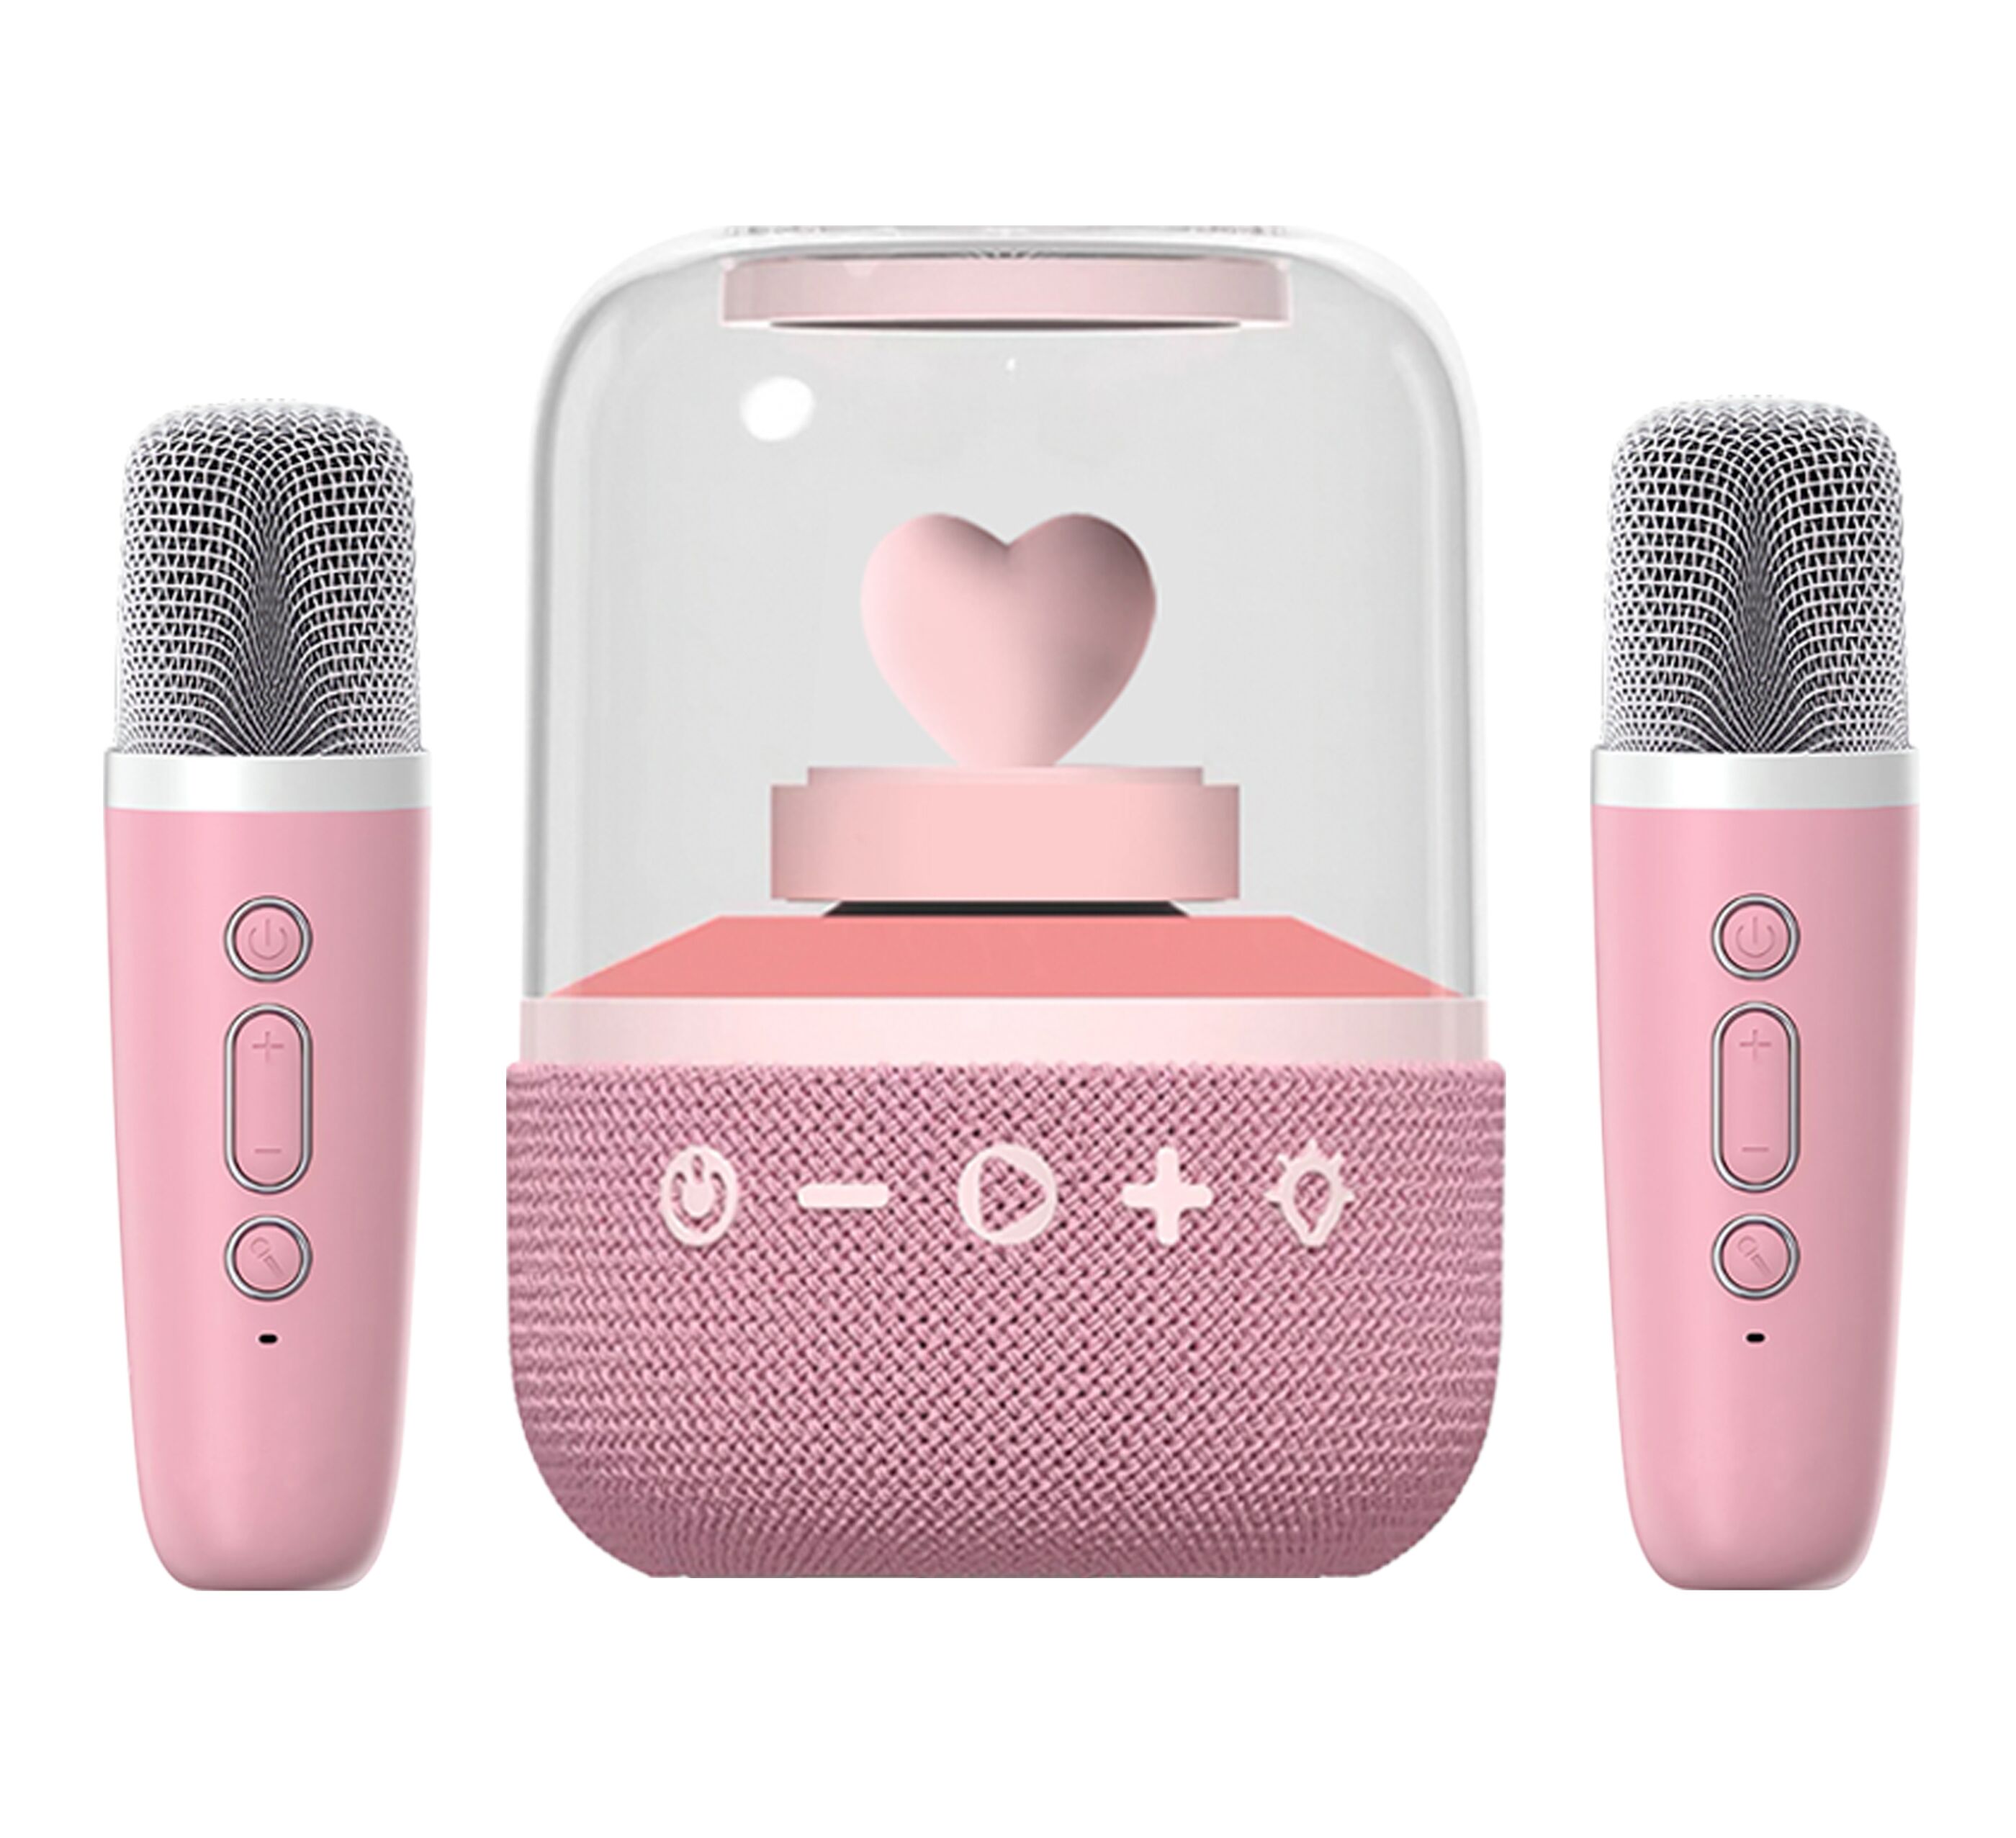 Altavoces Bluetooth con dispositivo de micrófono para juguetes infantiles.